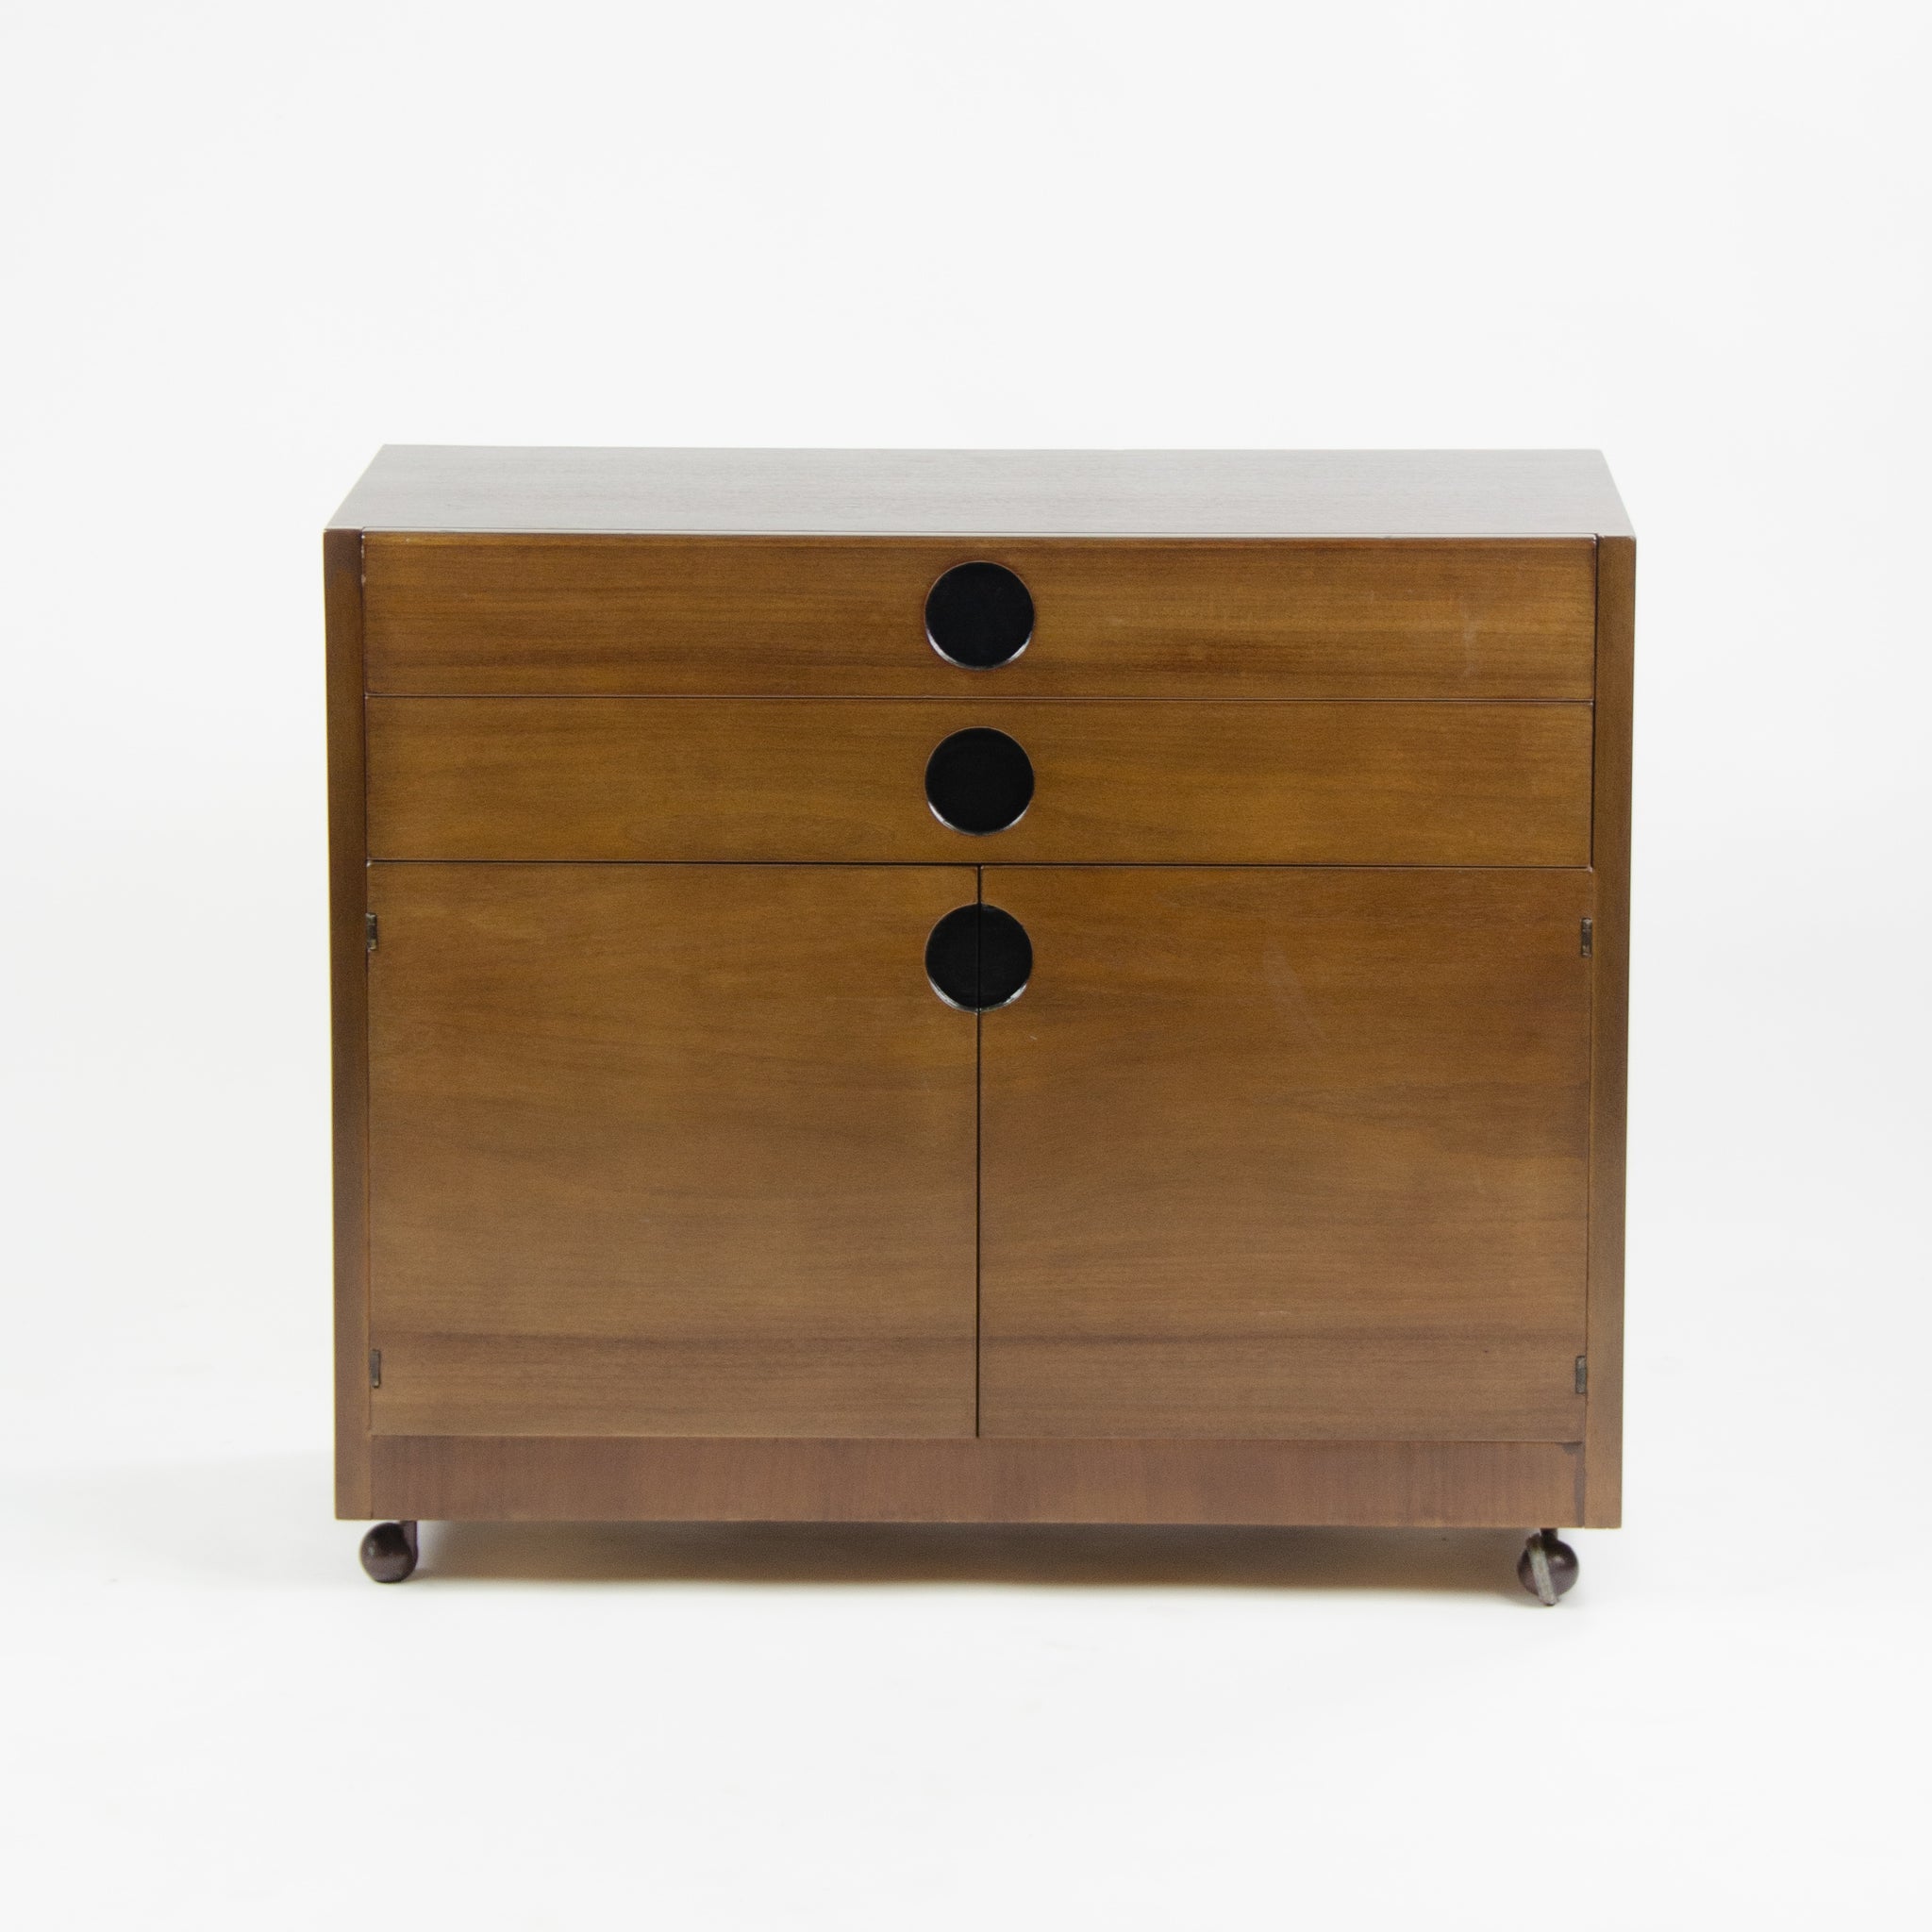 SOLD 1930's Gilbert Rohde Herman Miller Art Deco Cabinet Dresser 7005